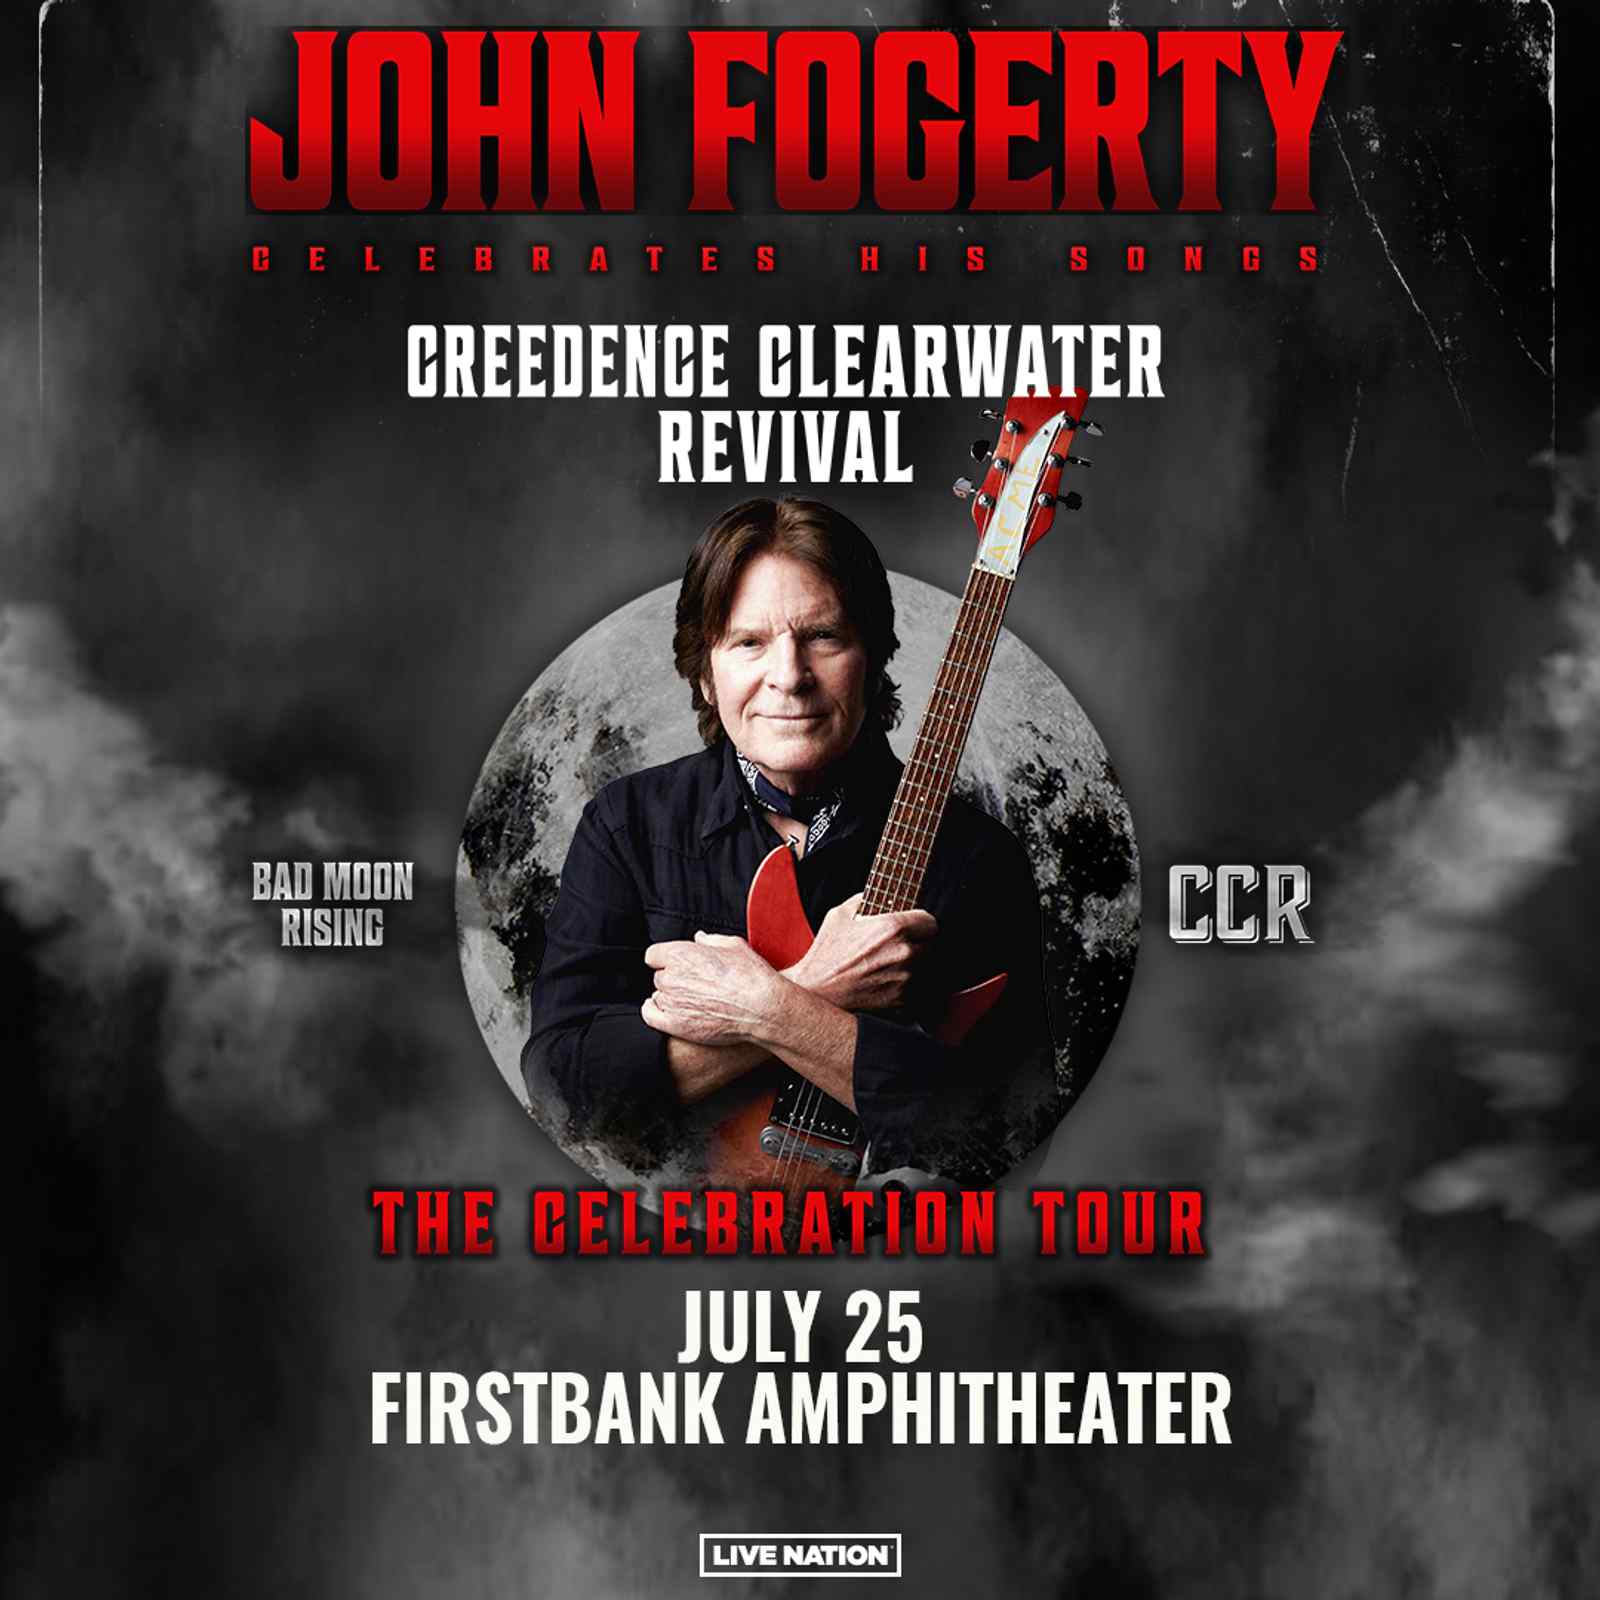 John Fogerty The Celebration Tour with special guest Hearty Har Farm Bureau Concert Series﻿ Franklin TN